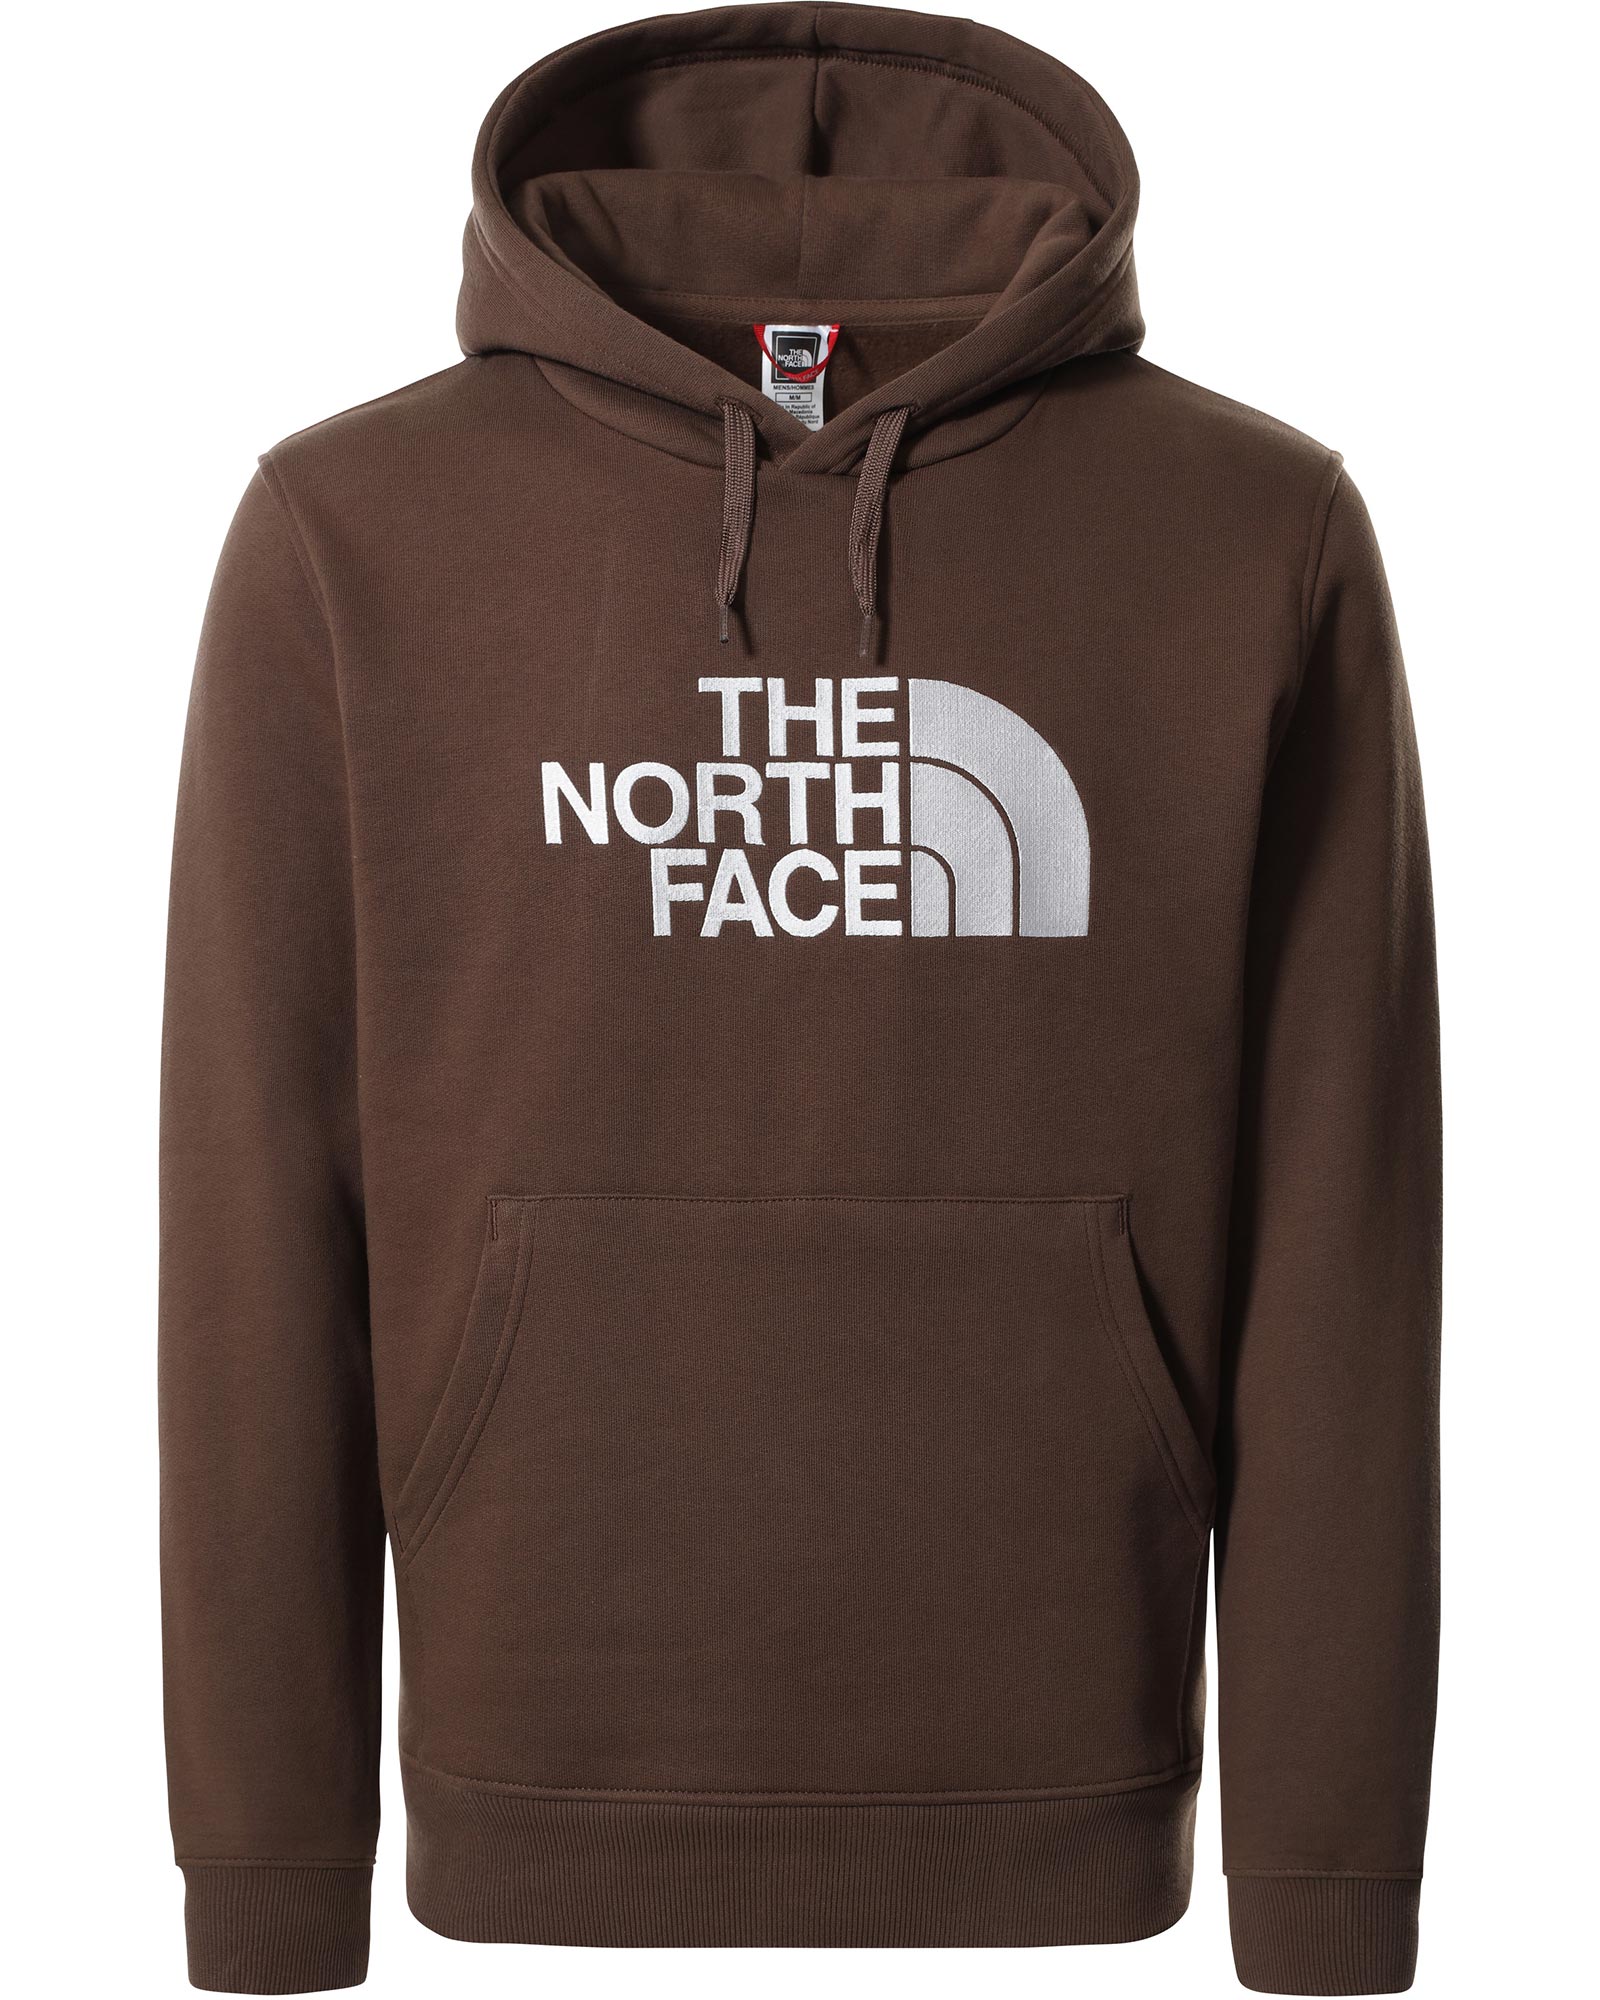 The North Face Drew Peak Men’s Hoodie - Coal Brown XL